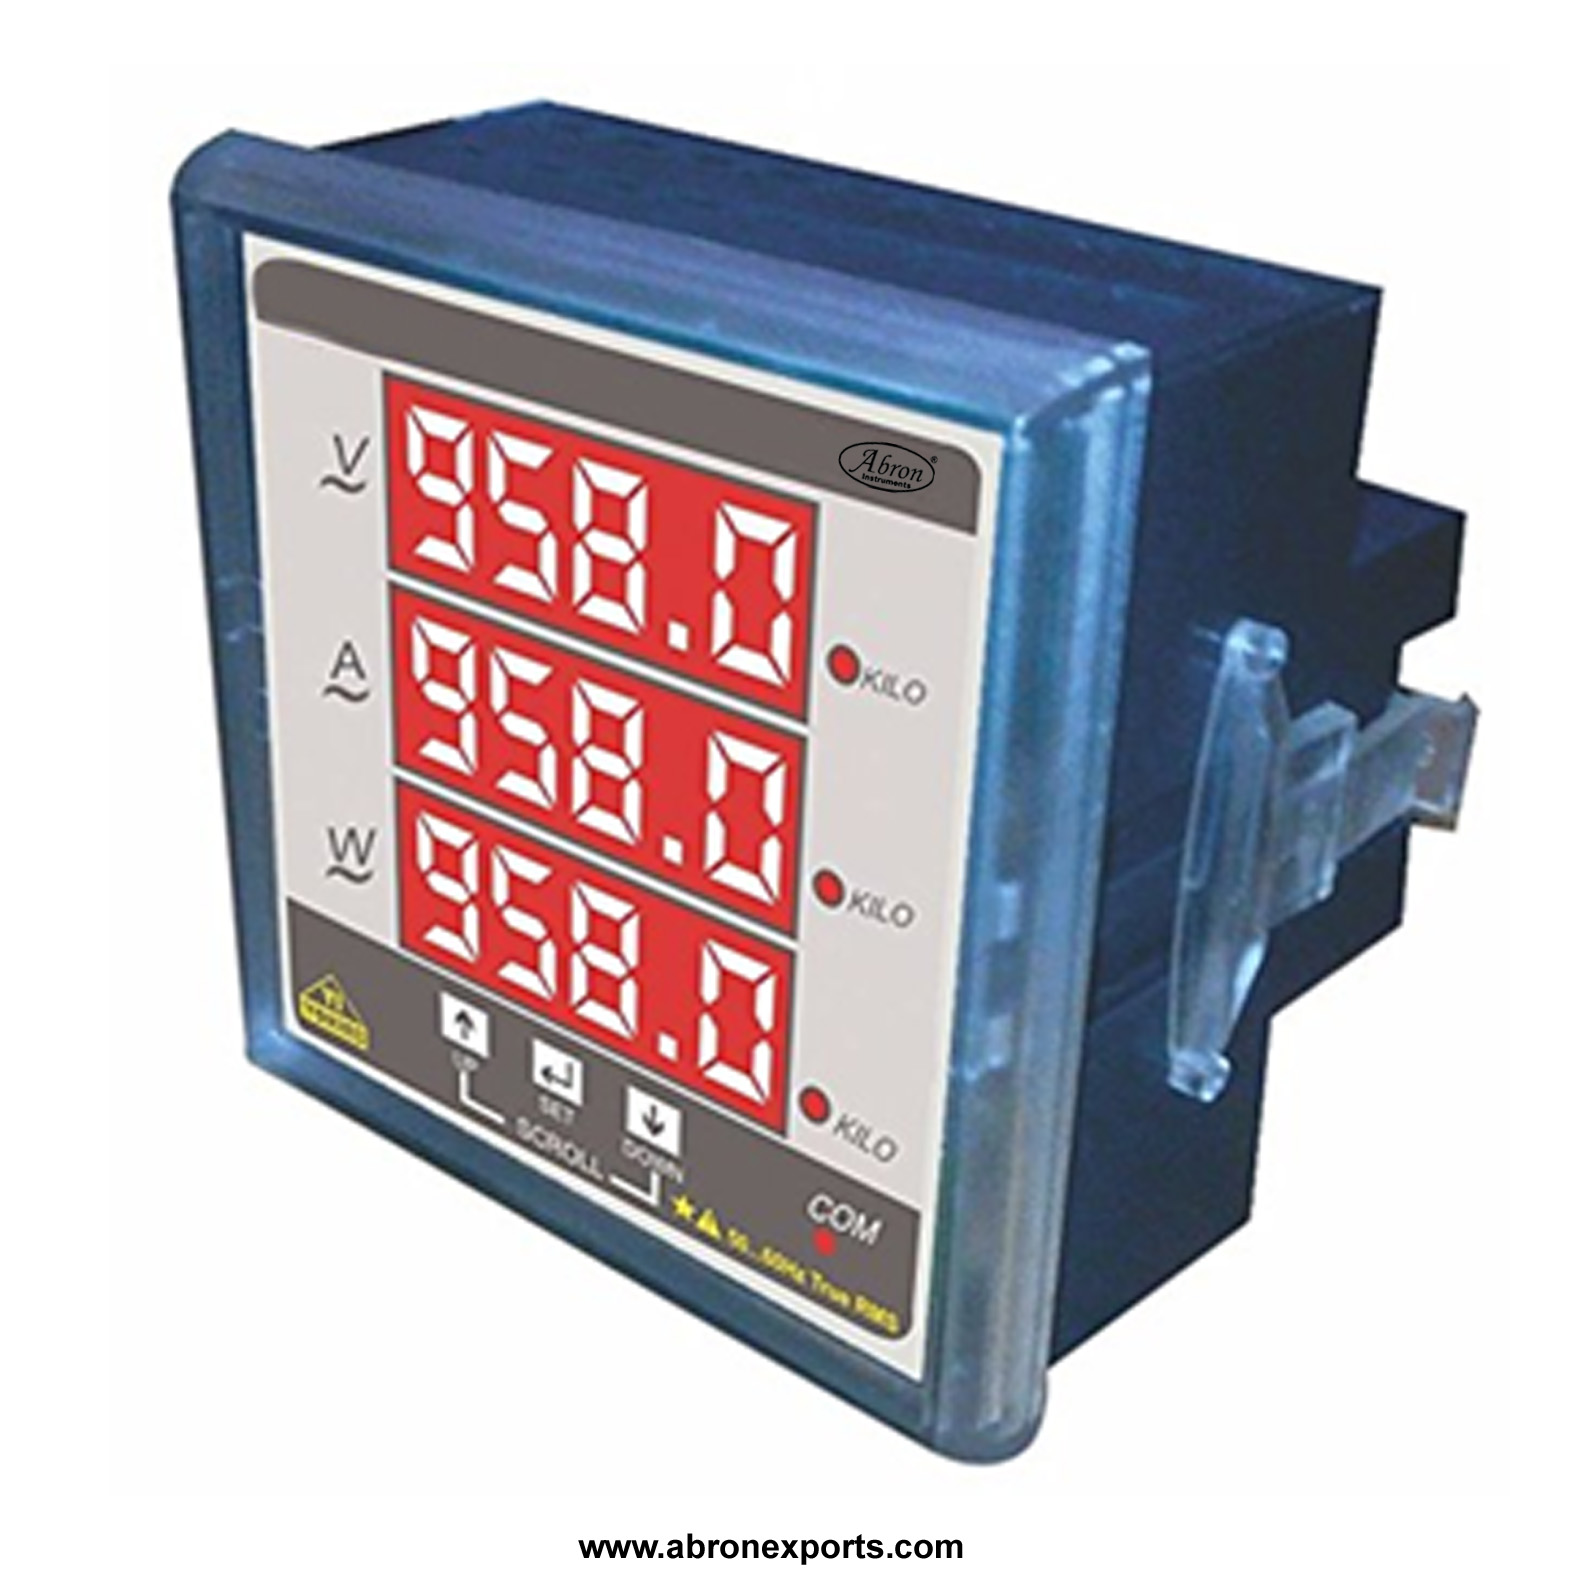 Power factor meter digital single phase ac abron AE-1325B